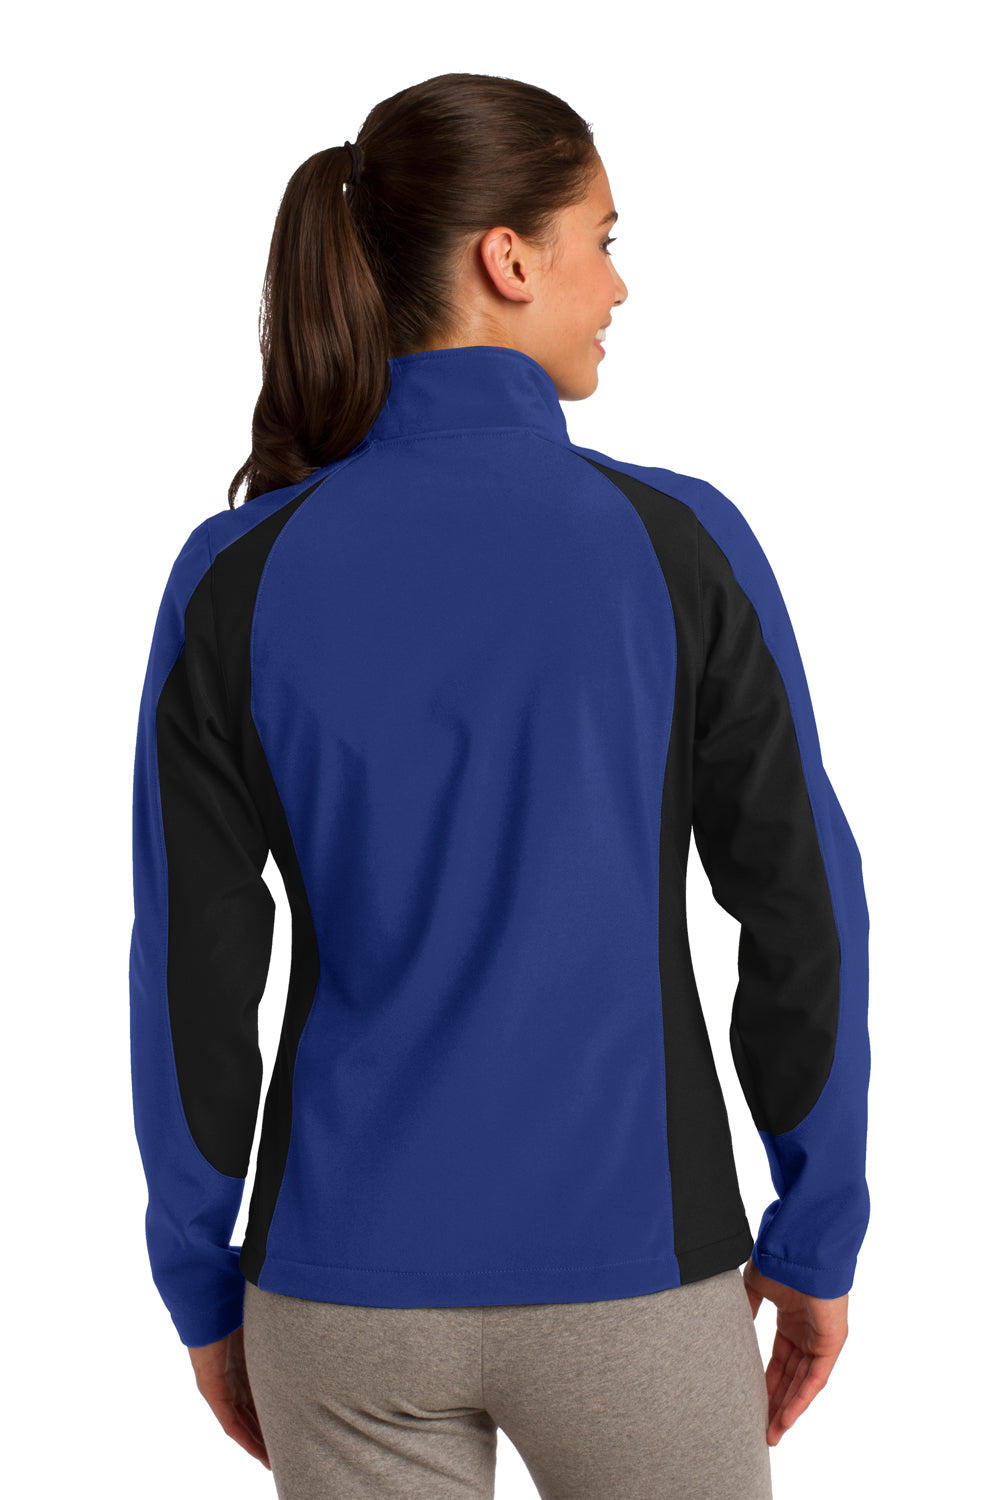 Sport-Tek LST970 Womens Water Resistant Full Zip Jacket Royal Blue/Black Back